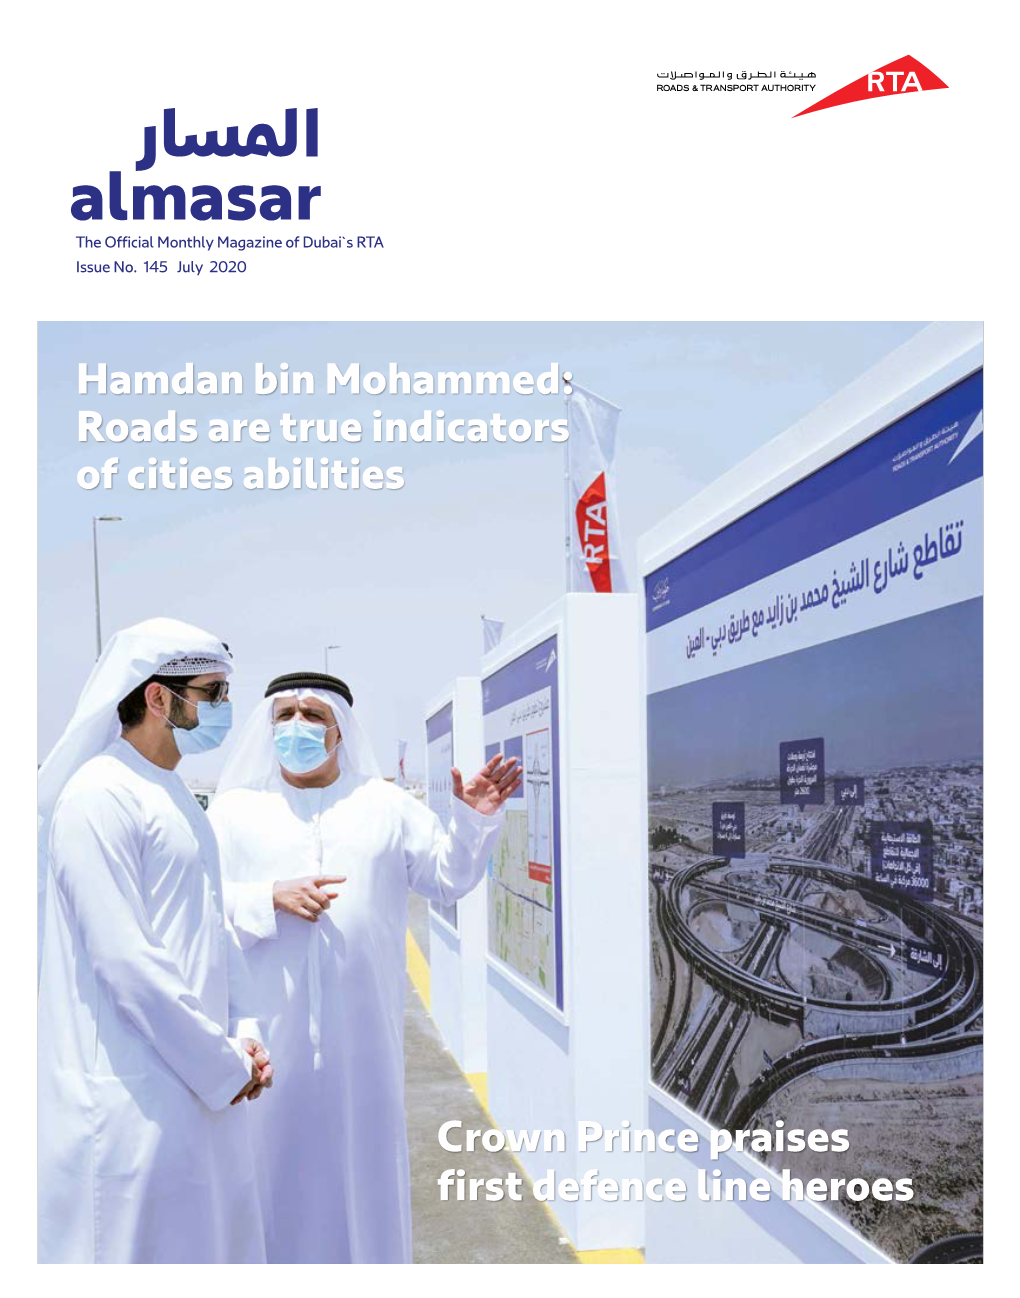 Hamdan Bin Mohammed: Roads Are True Indicators of Cities Abilities